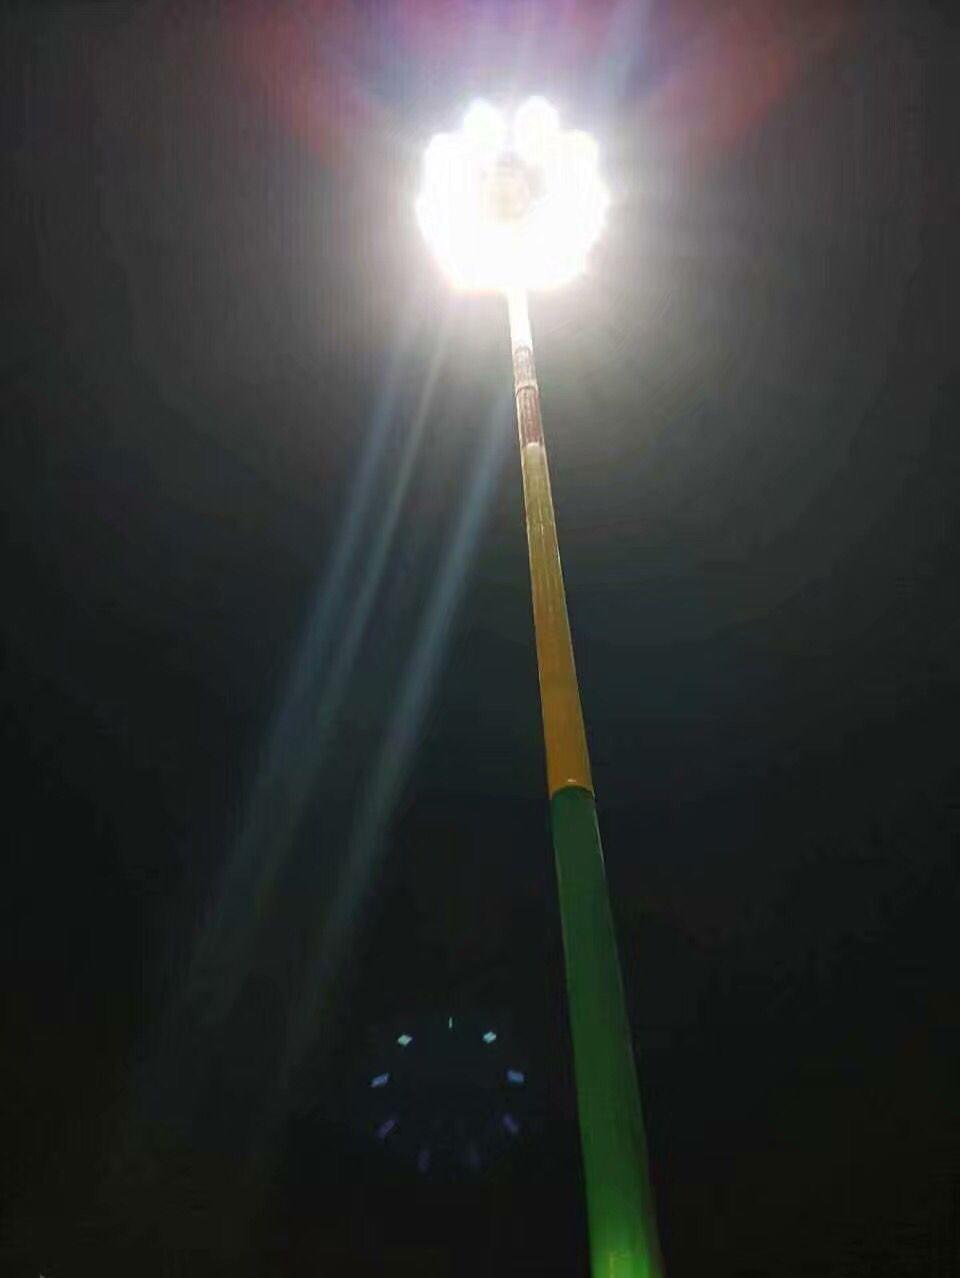 Baode Lights 20m Sodium Lamp 1000W White Light High Mast Lighthigh with Power Brightness